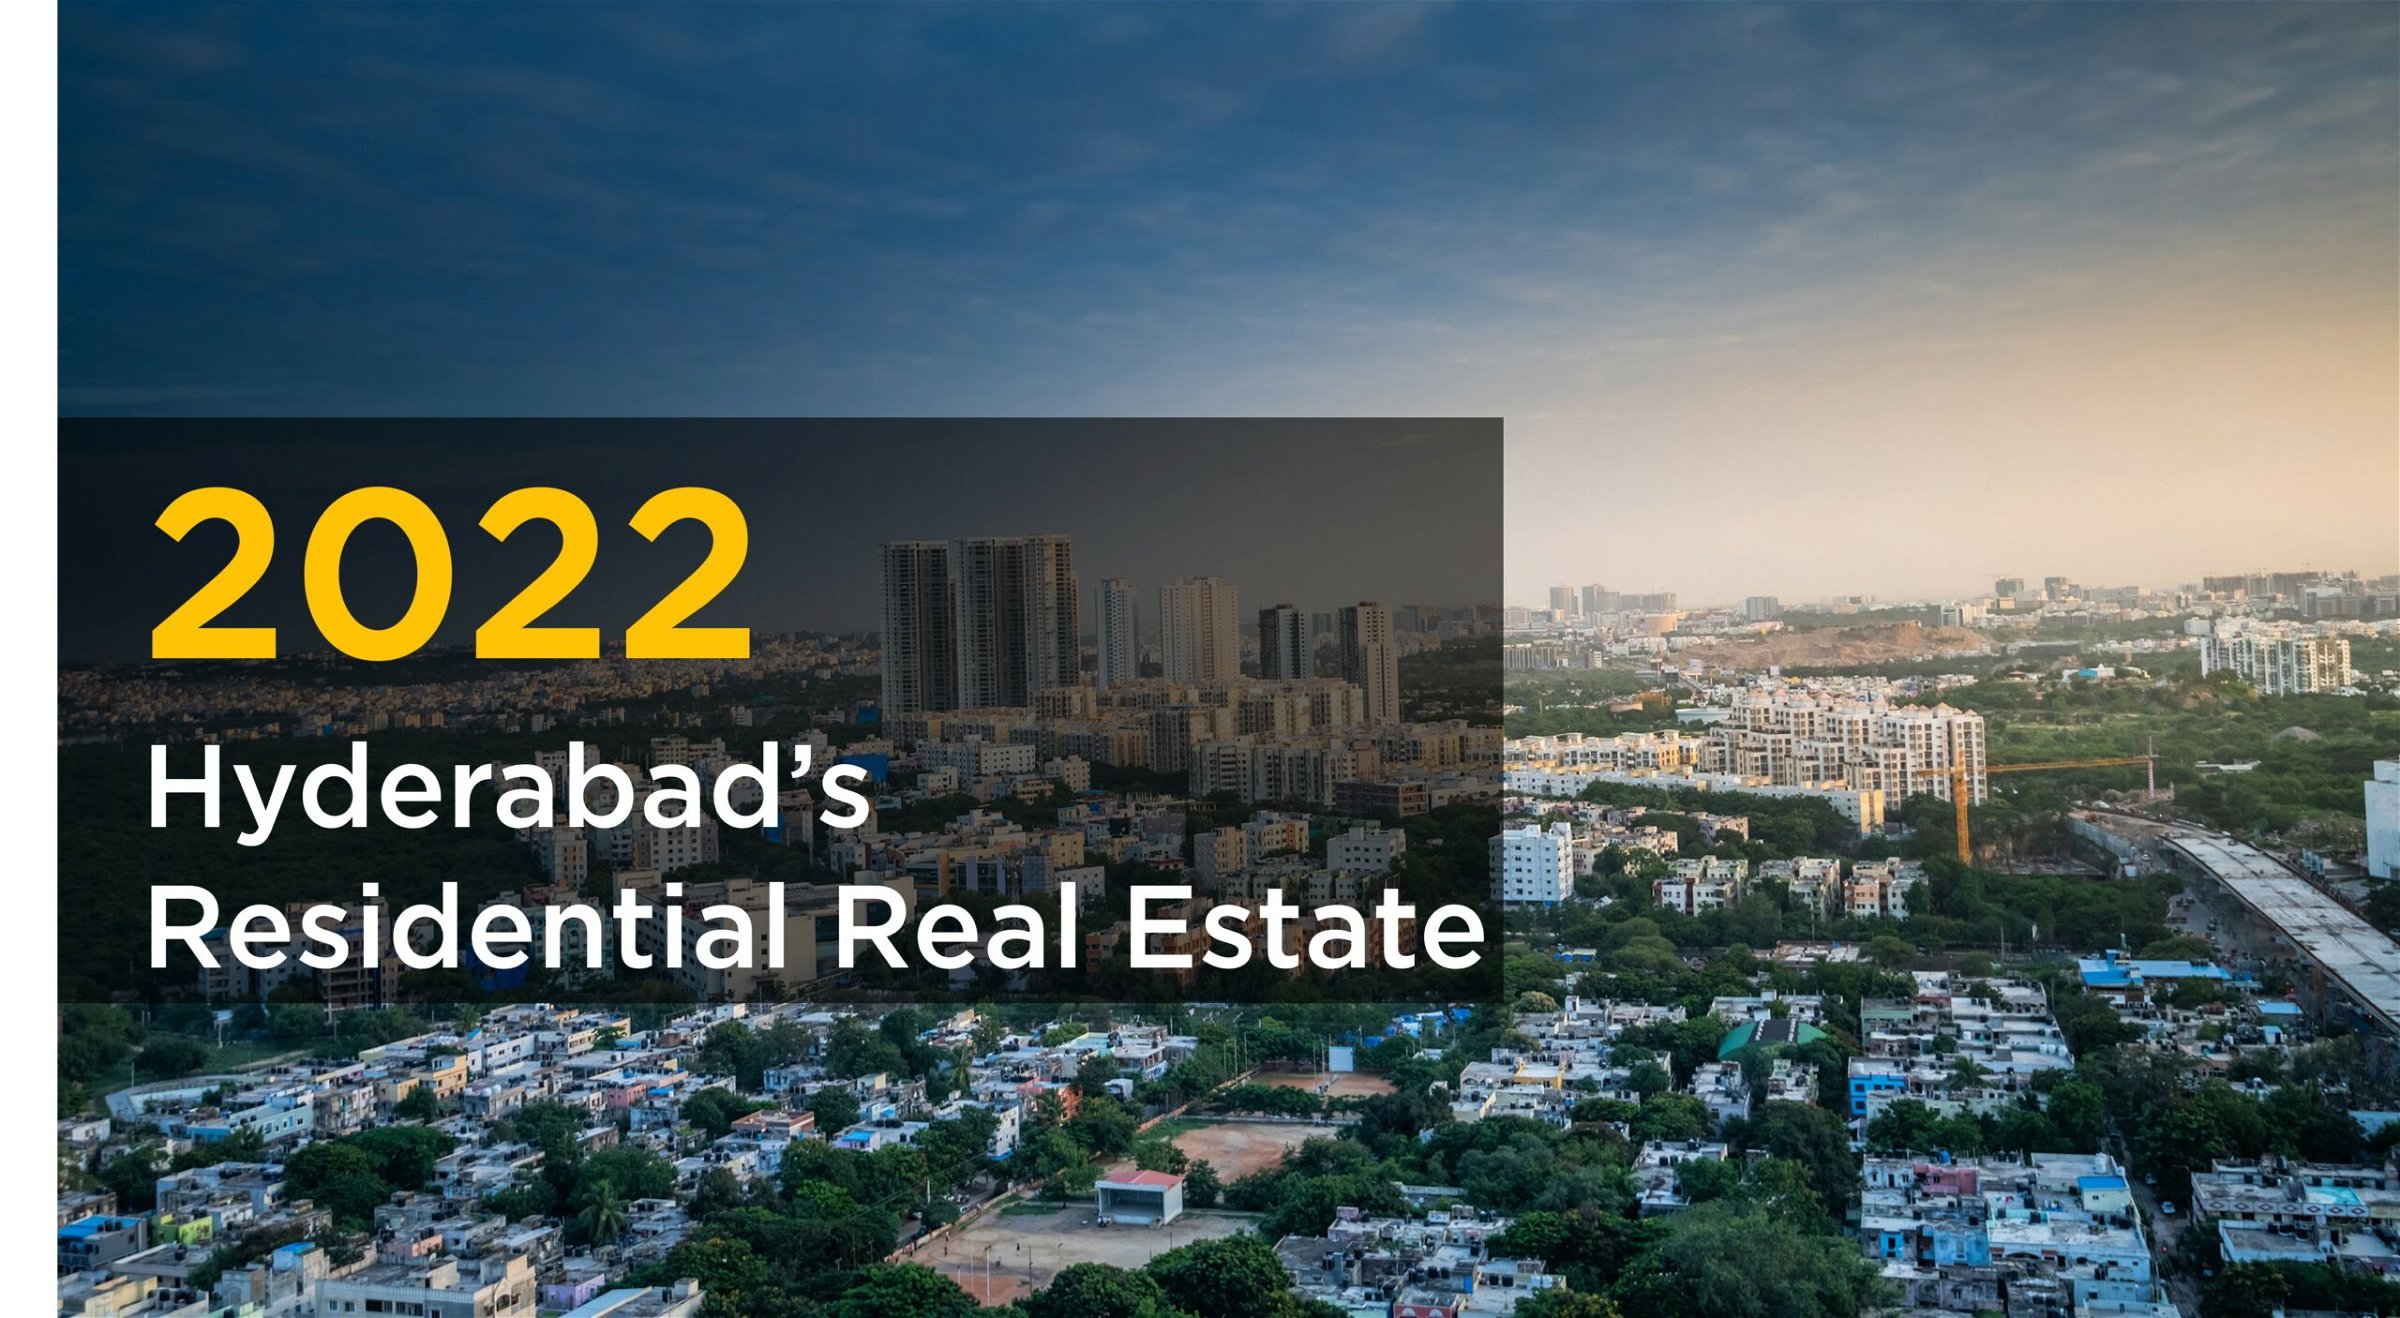 Hyderabad residential property demand grew 59% YoY in 2022